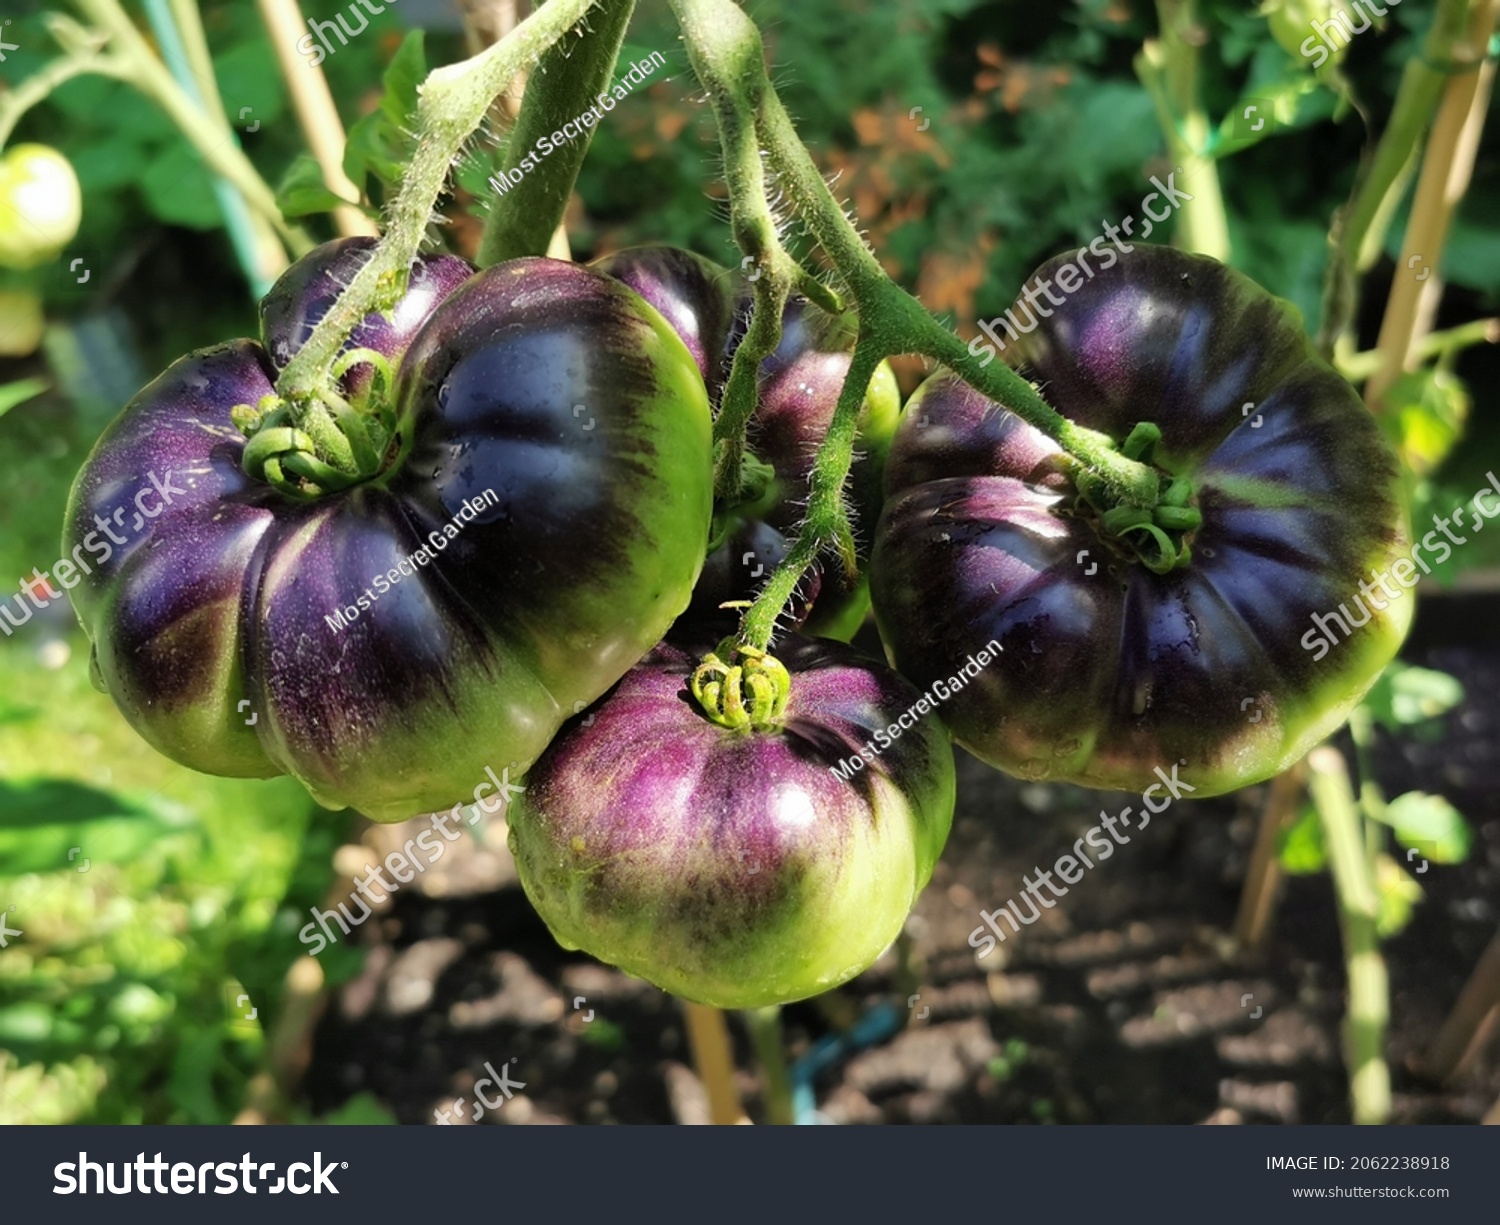 Black Beauty Tomato